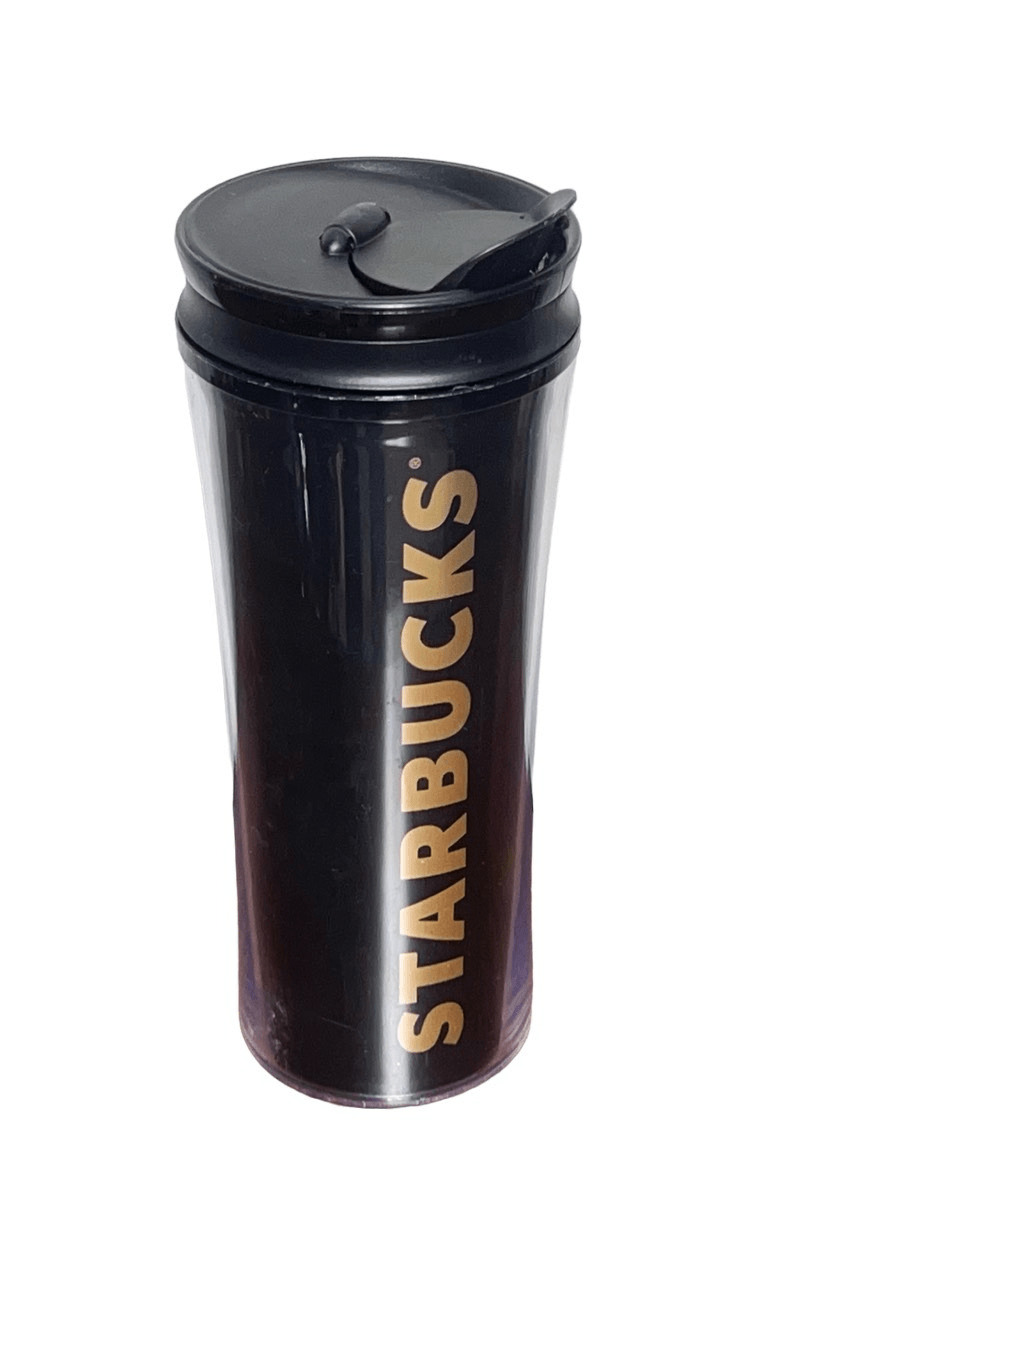 Starbucks 2015 Black and Gold Travel Mug Tumbler